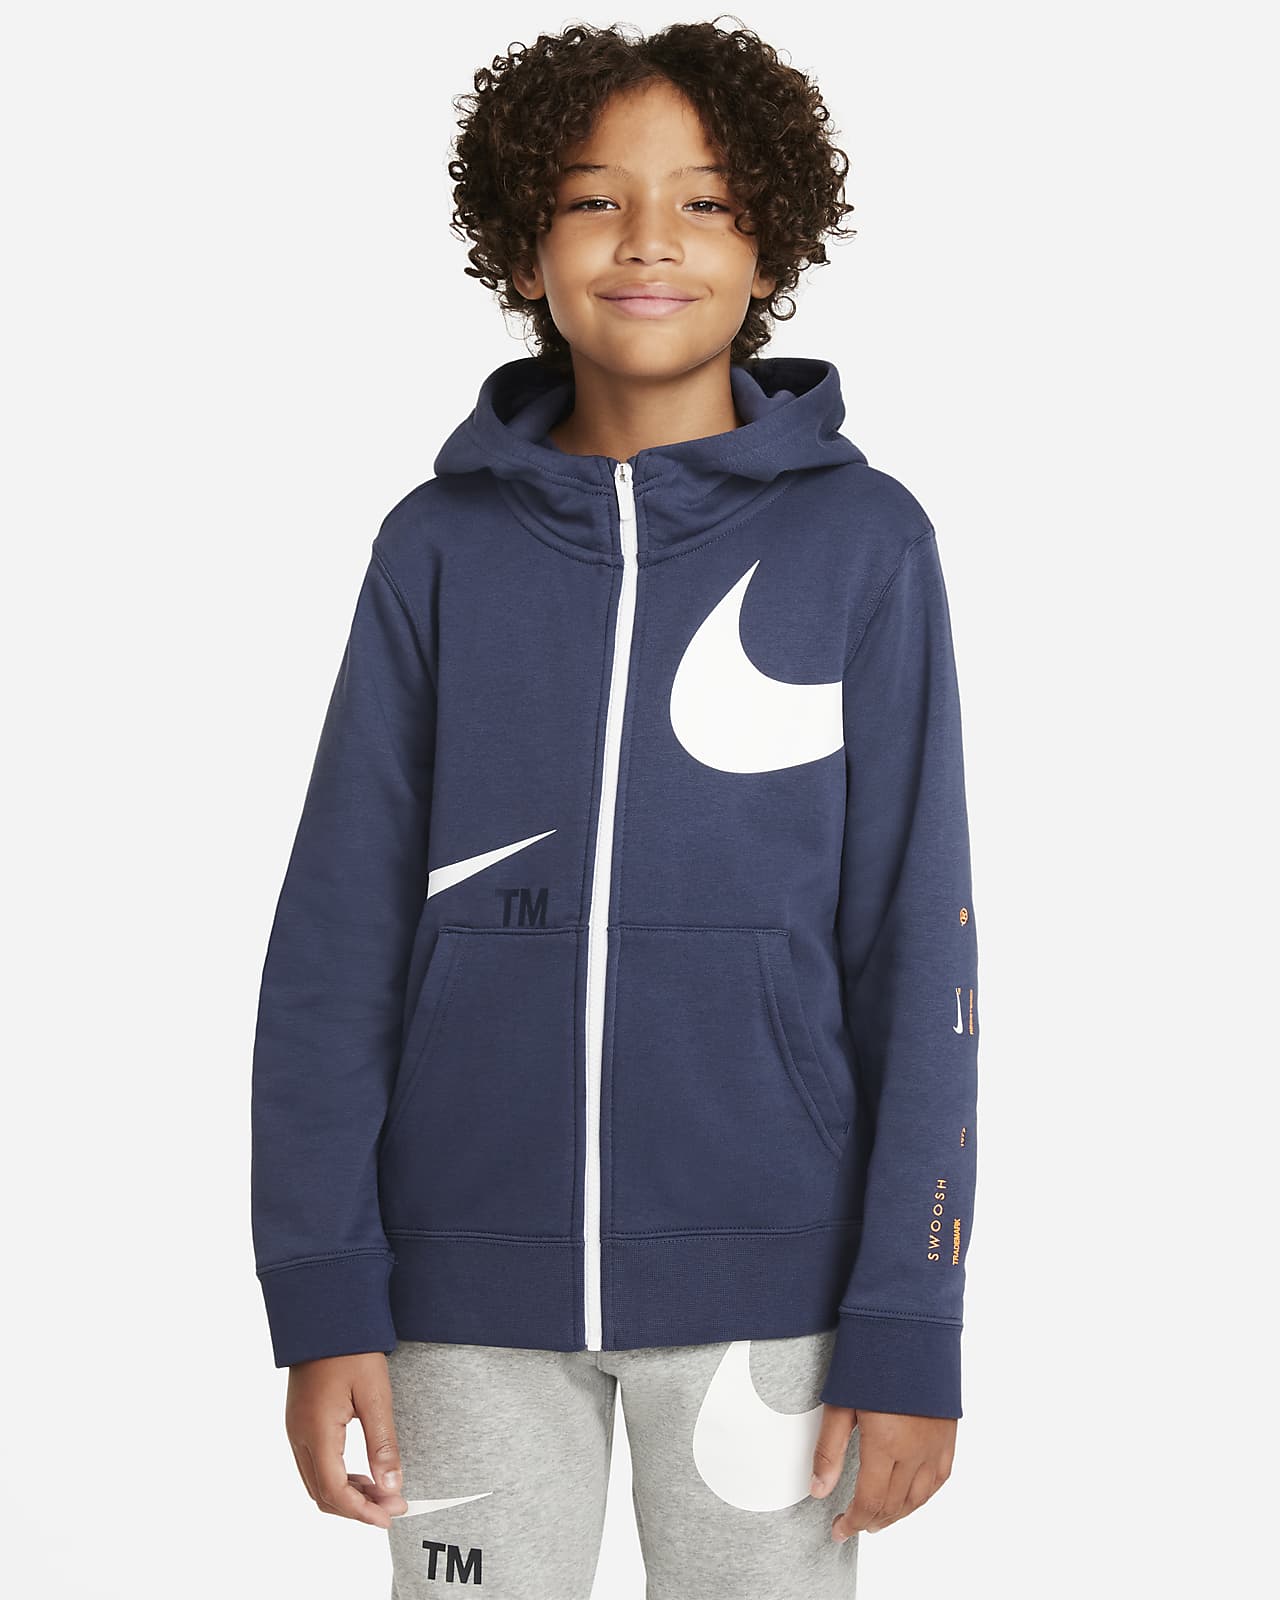 Hoodie de lã cardada com fecho completo Nike Sportswear Swoosh Júnior (Rapaz)